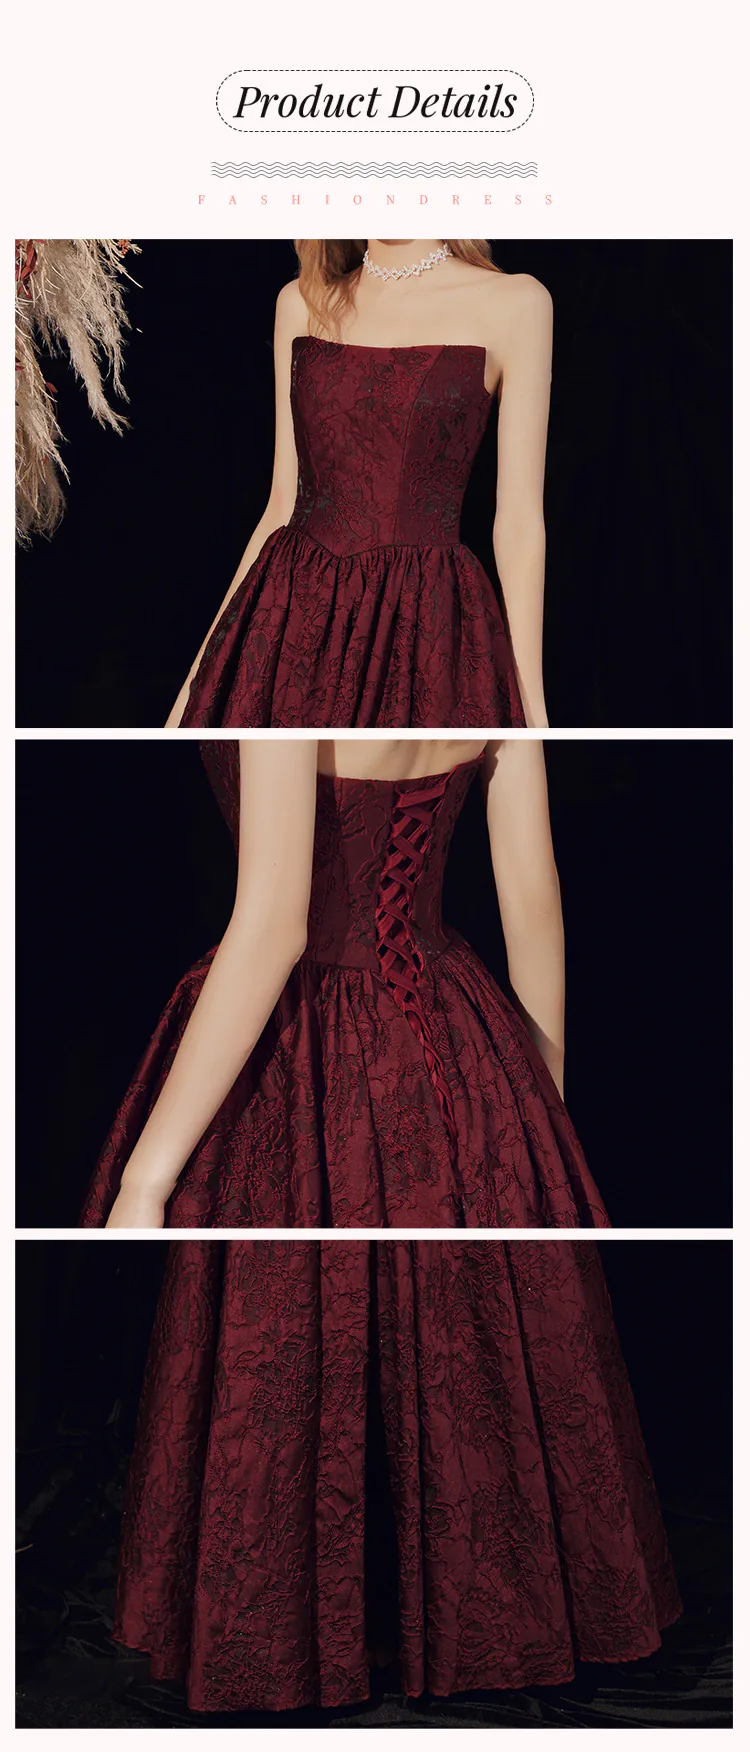 Classy-Wine-Red-Sleeveless-Jacquard-Tube-Style-Evening-Prom-Dress14